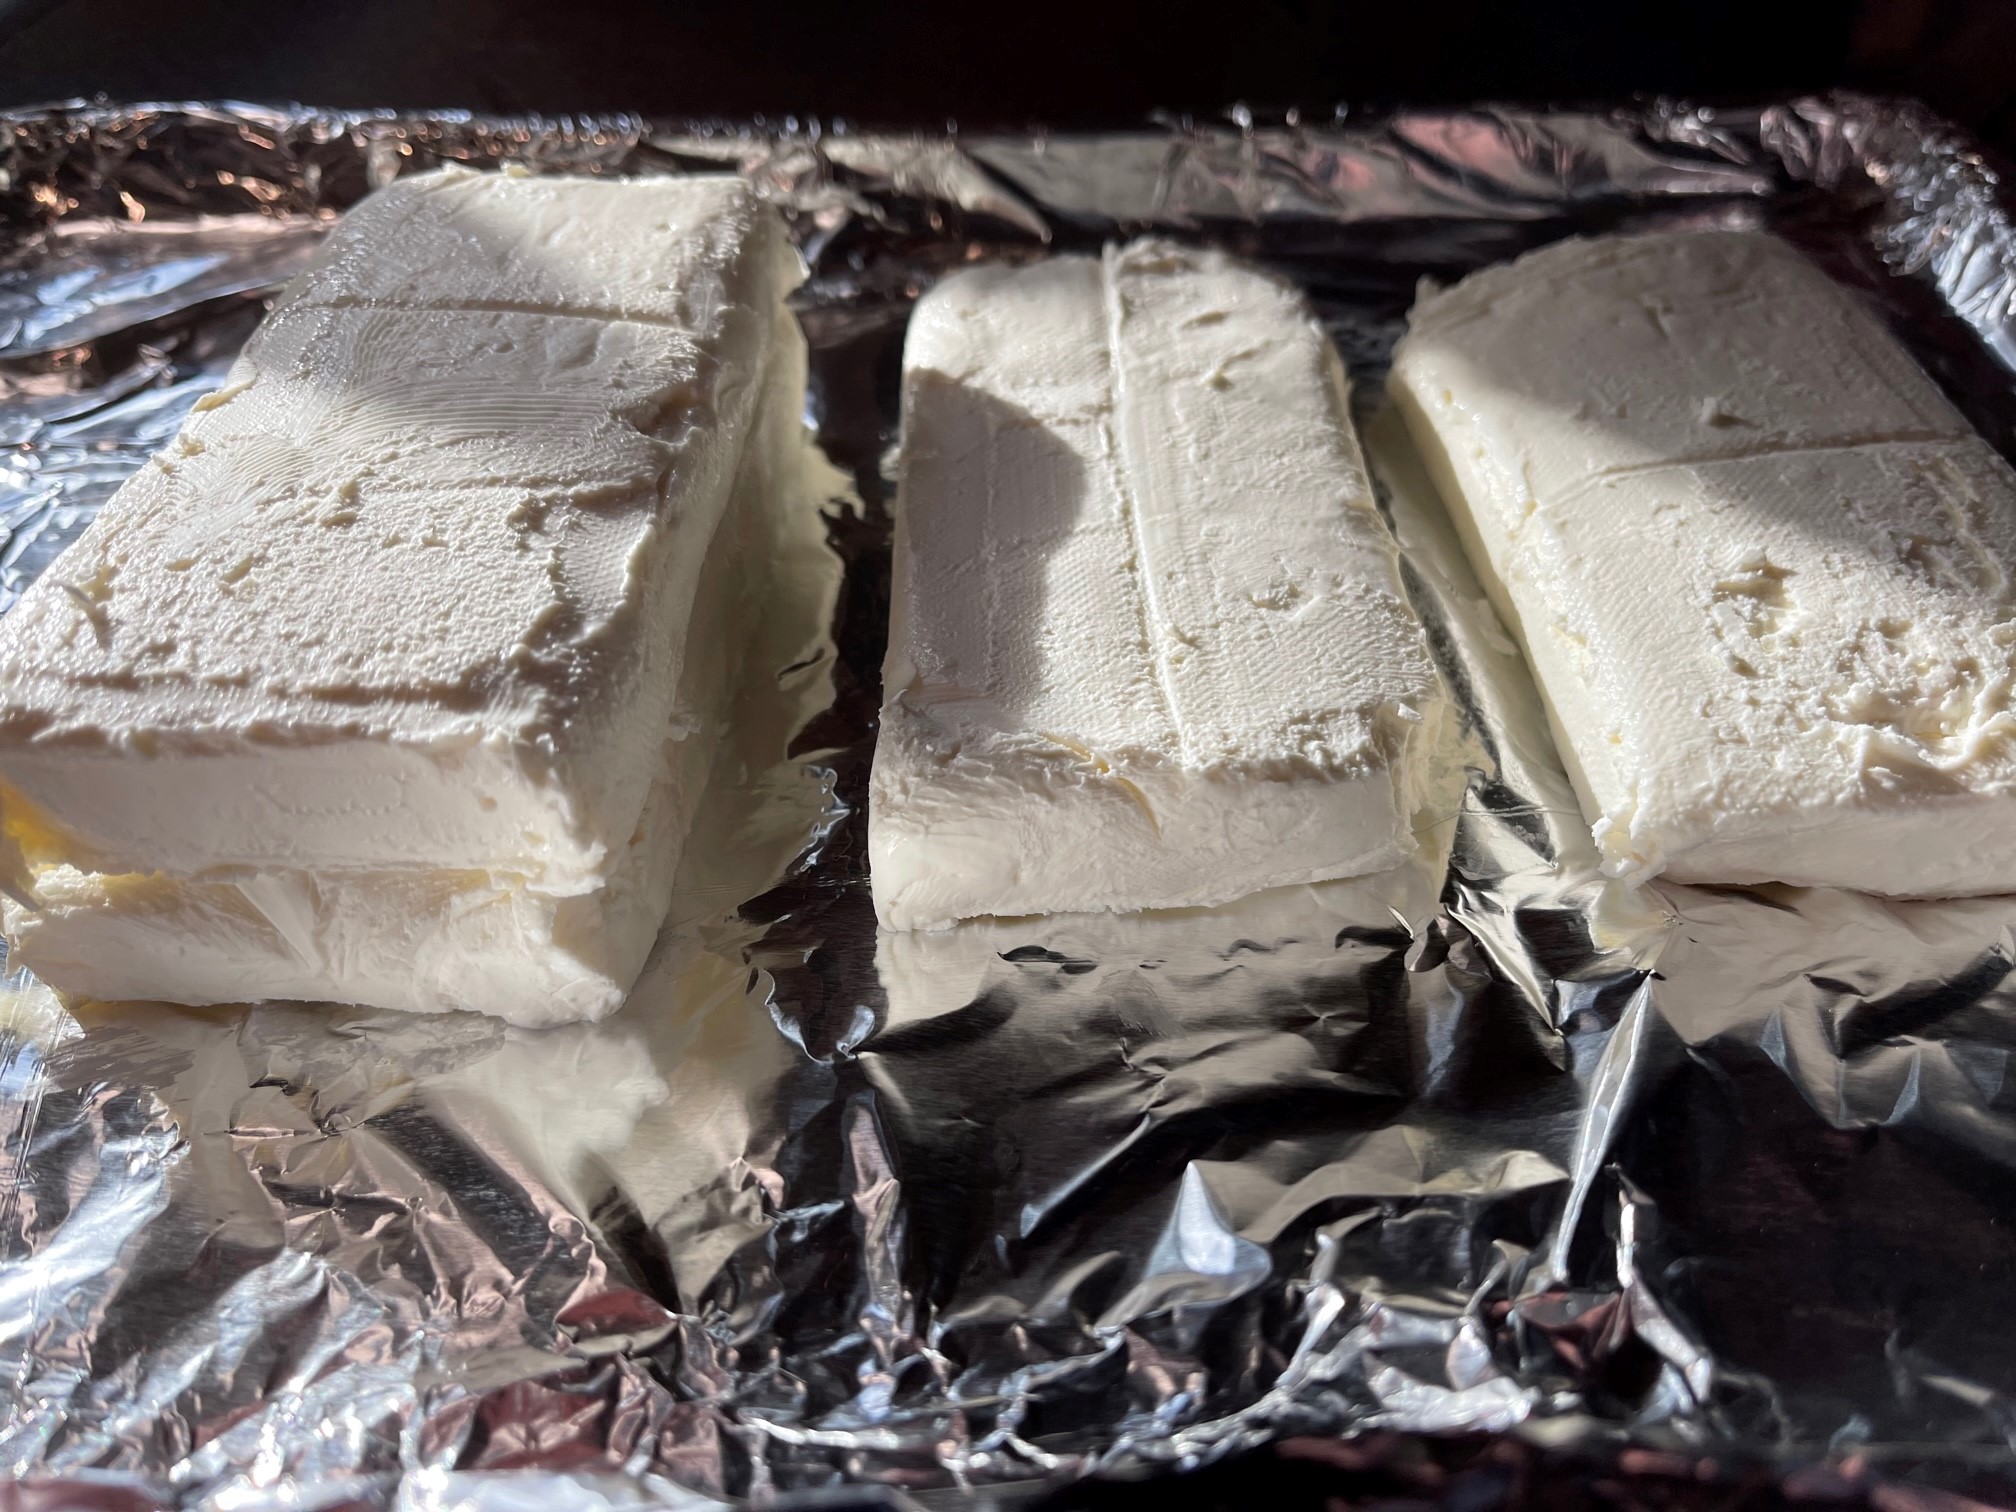 Cream cheese blocks cut in half